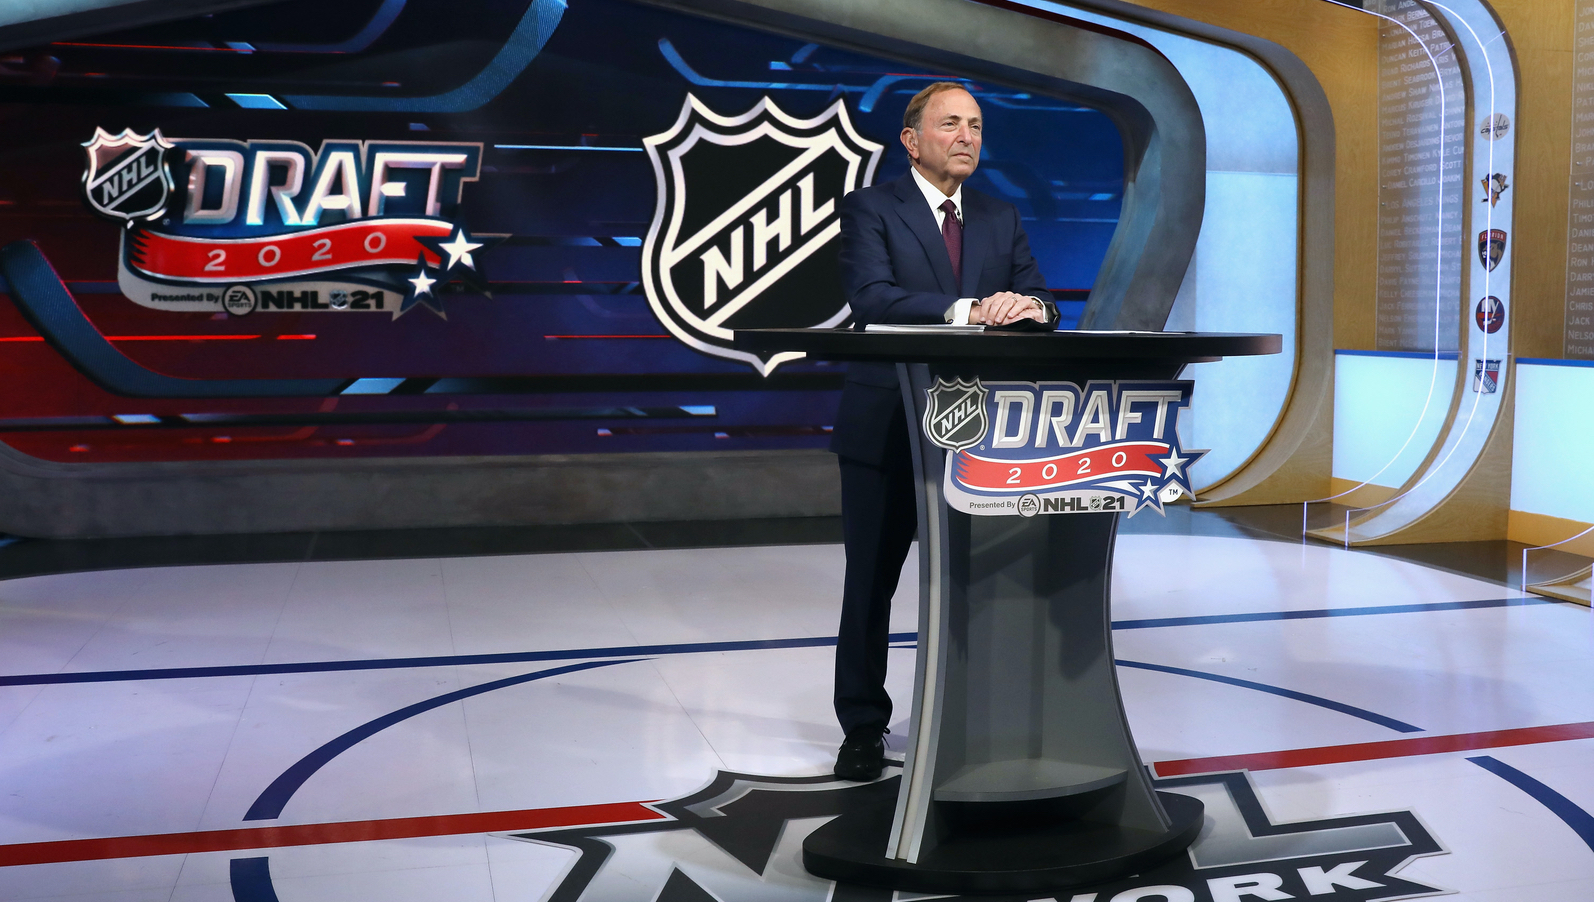  New logo package for 2021 NHL Draft lacks originality